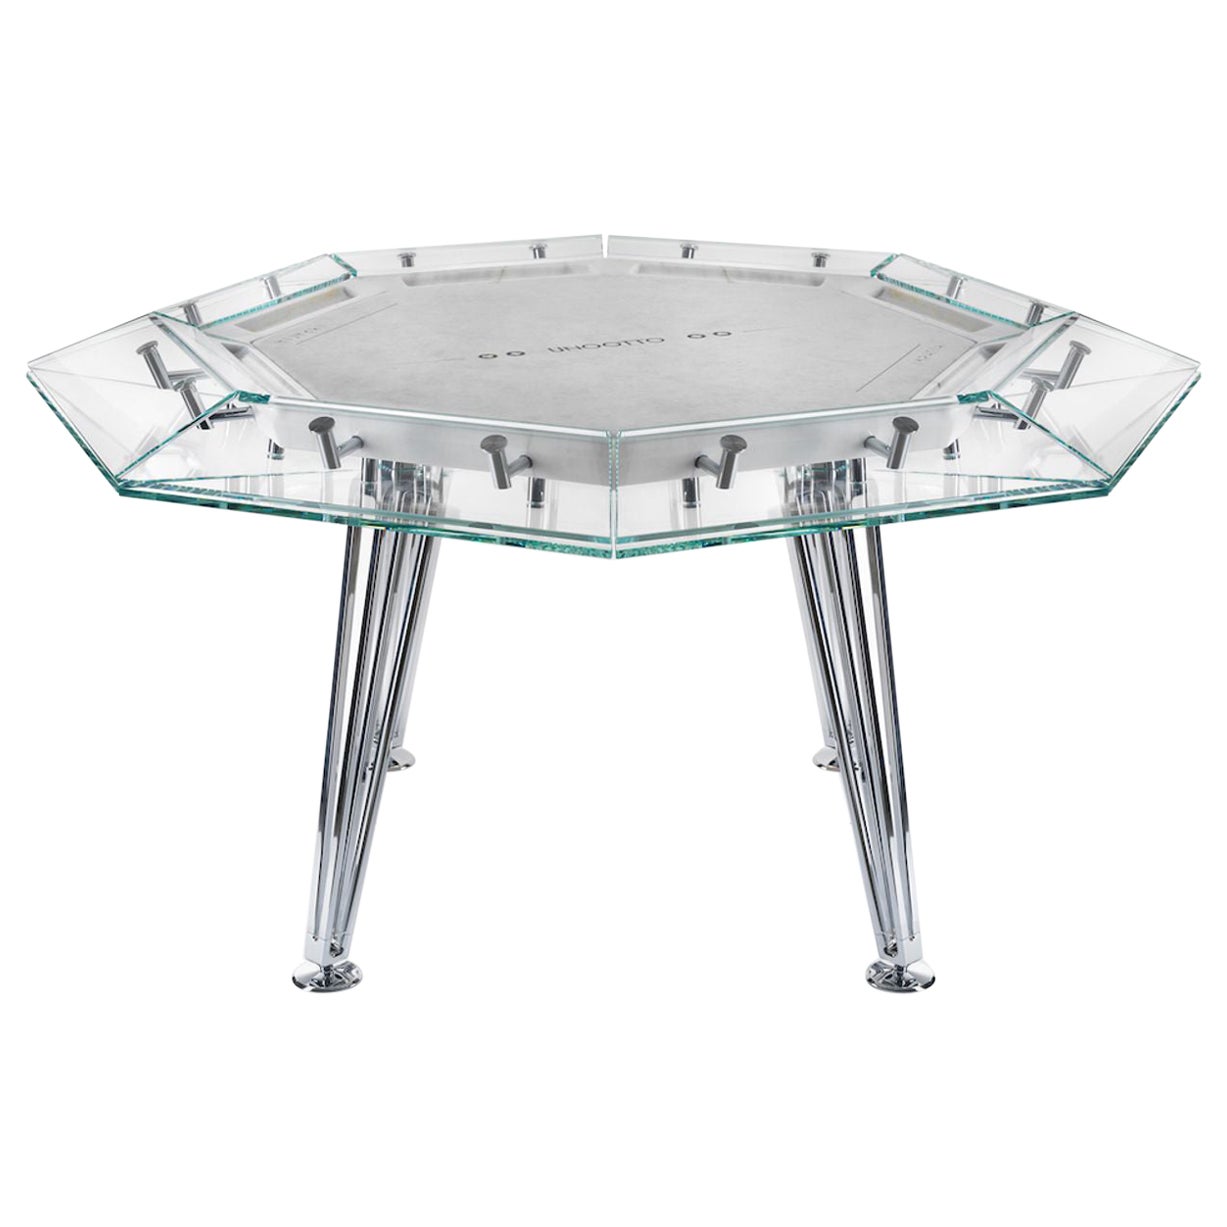 Unootto Black 8 Players Poker Table Pearl White Desktop, Impatia For Sale